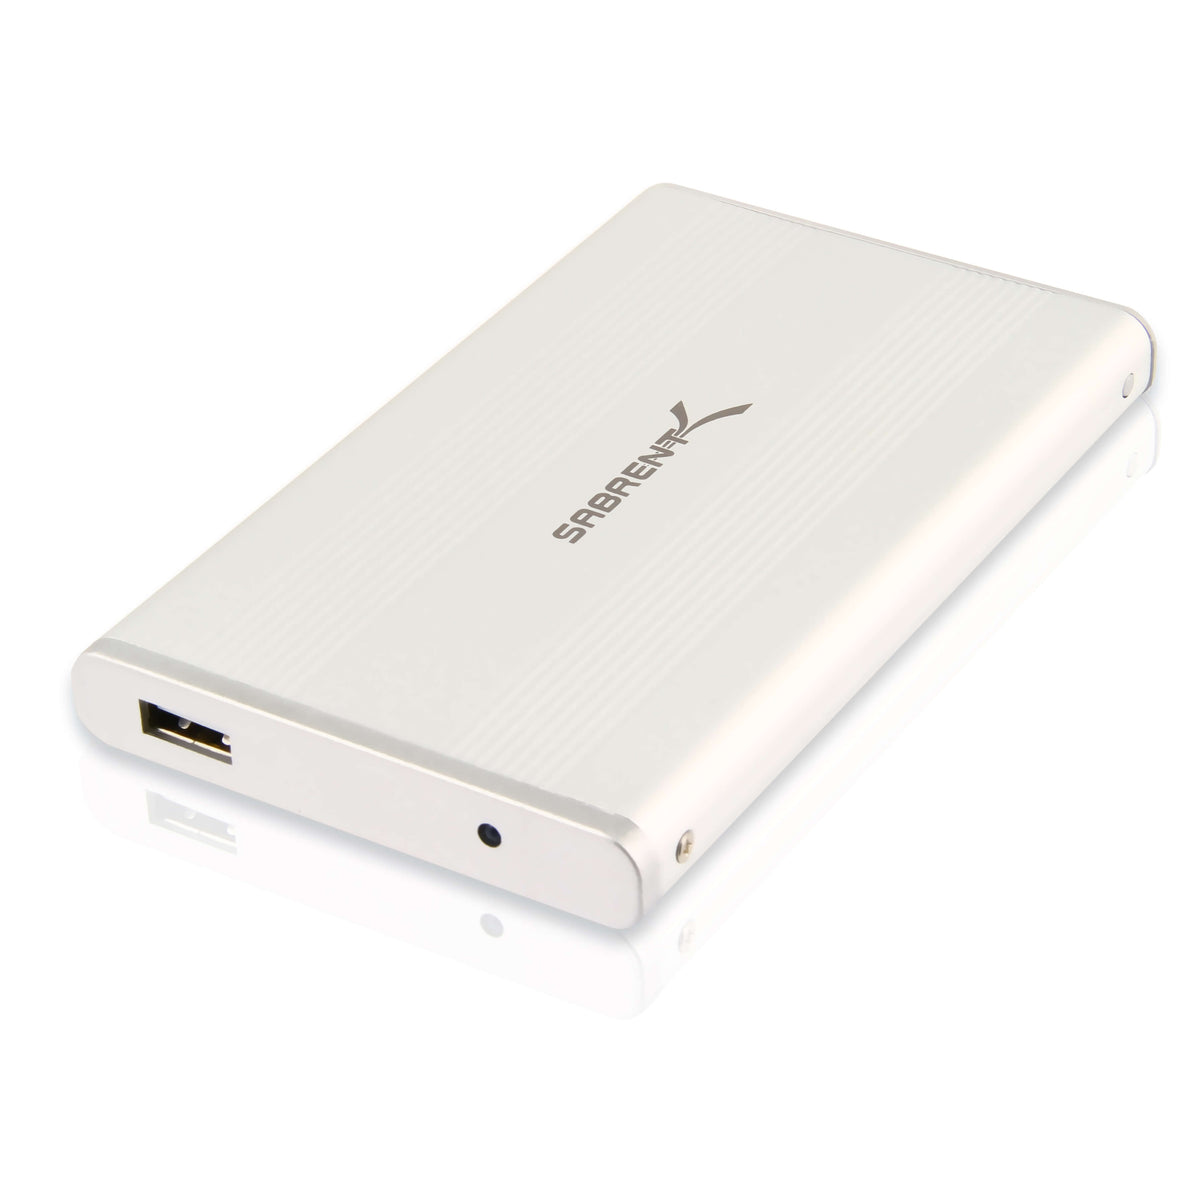 Ultra Slim 2.5-Inch IDE to USB 2.0 External Aluminum Hard Drive Enclosure | White